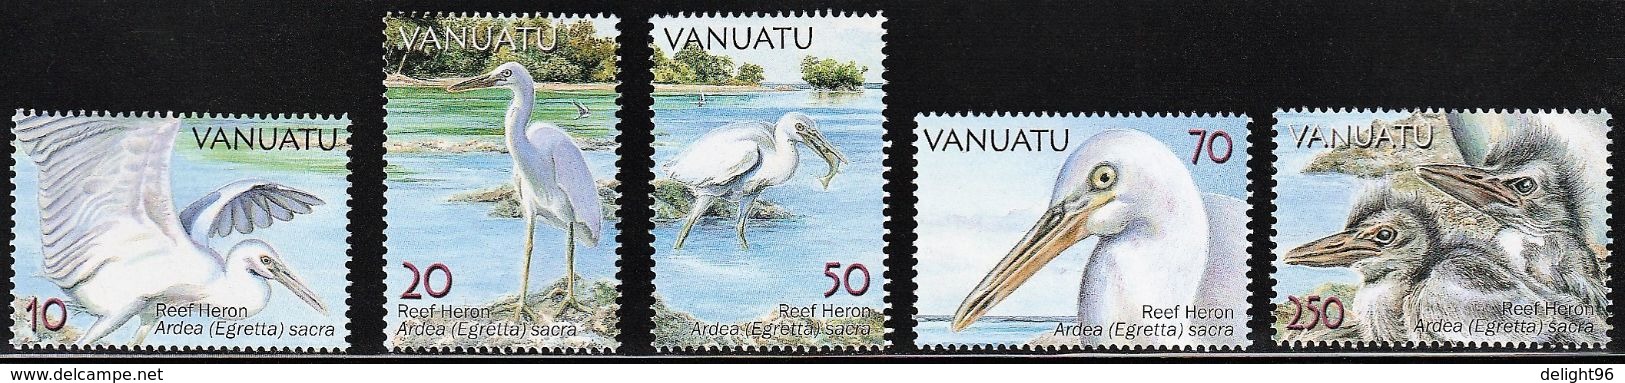 2007 Vanuatu Herons Of The Reef Set And Minisheet (** / MNH / UMM) - Cigognes & échassiers